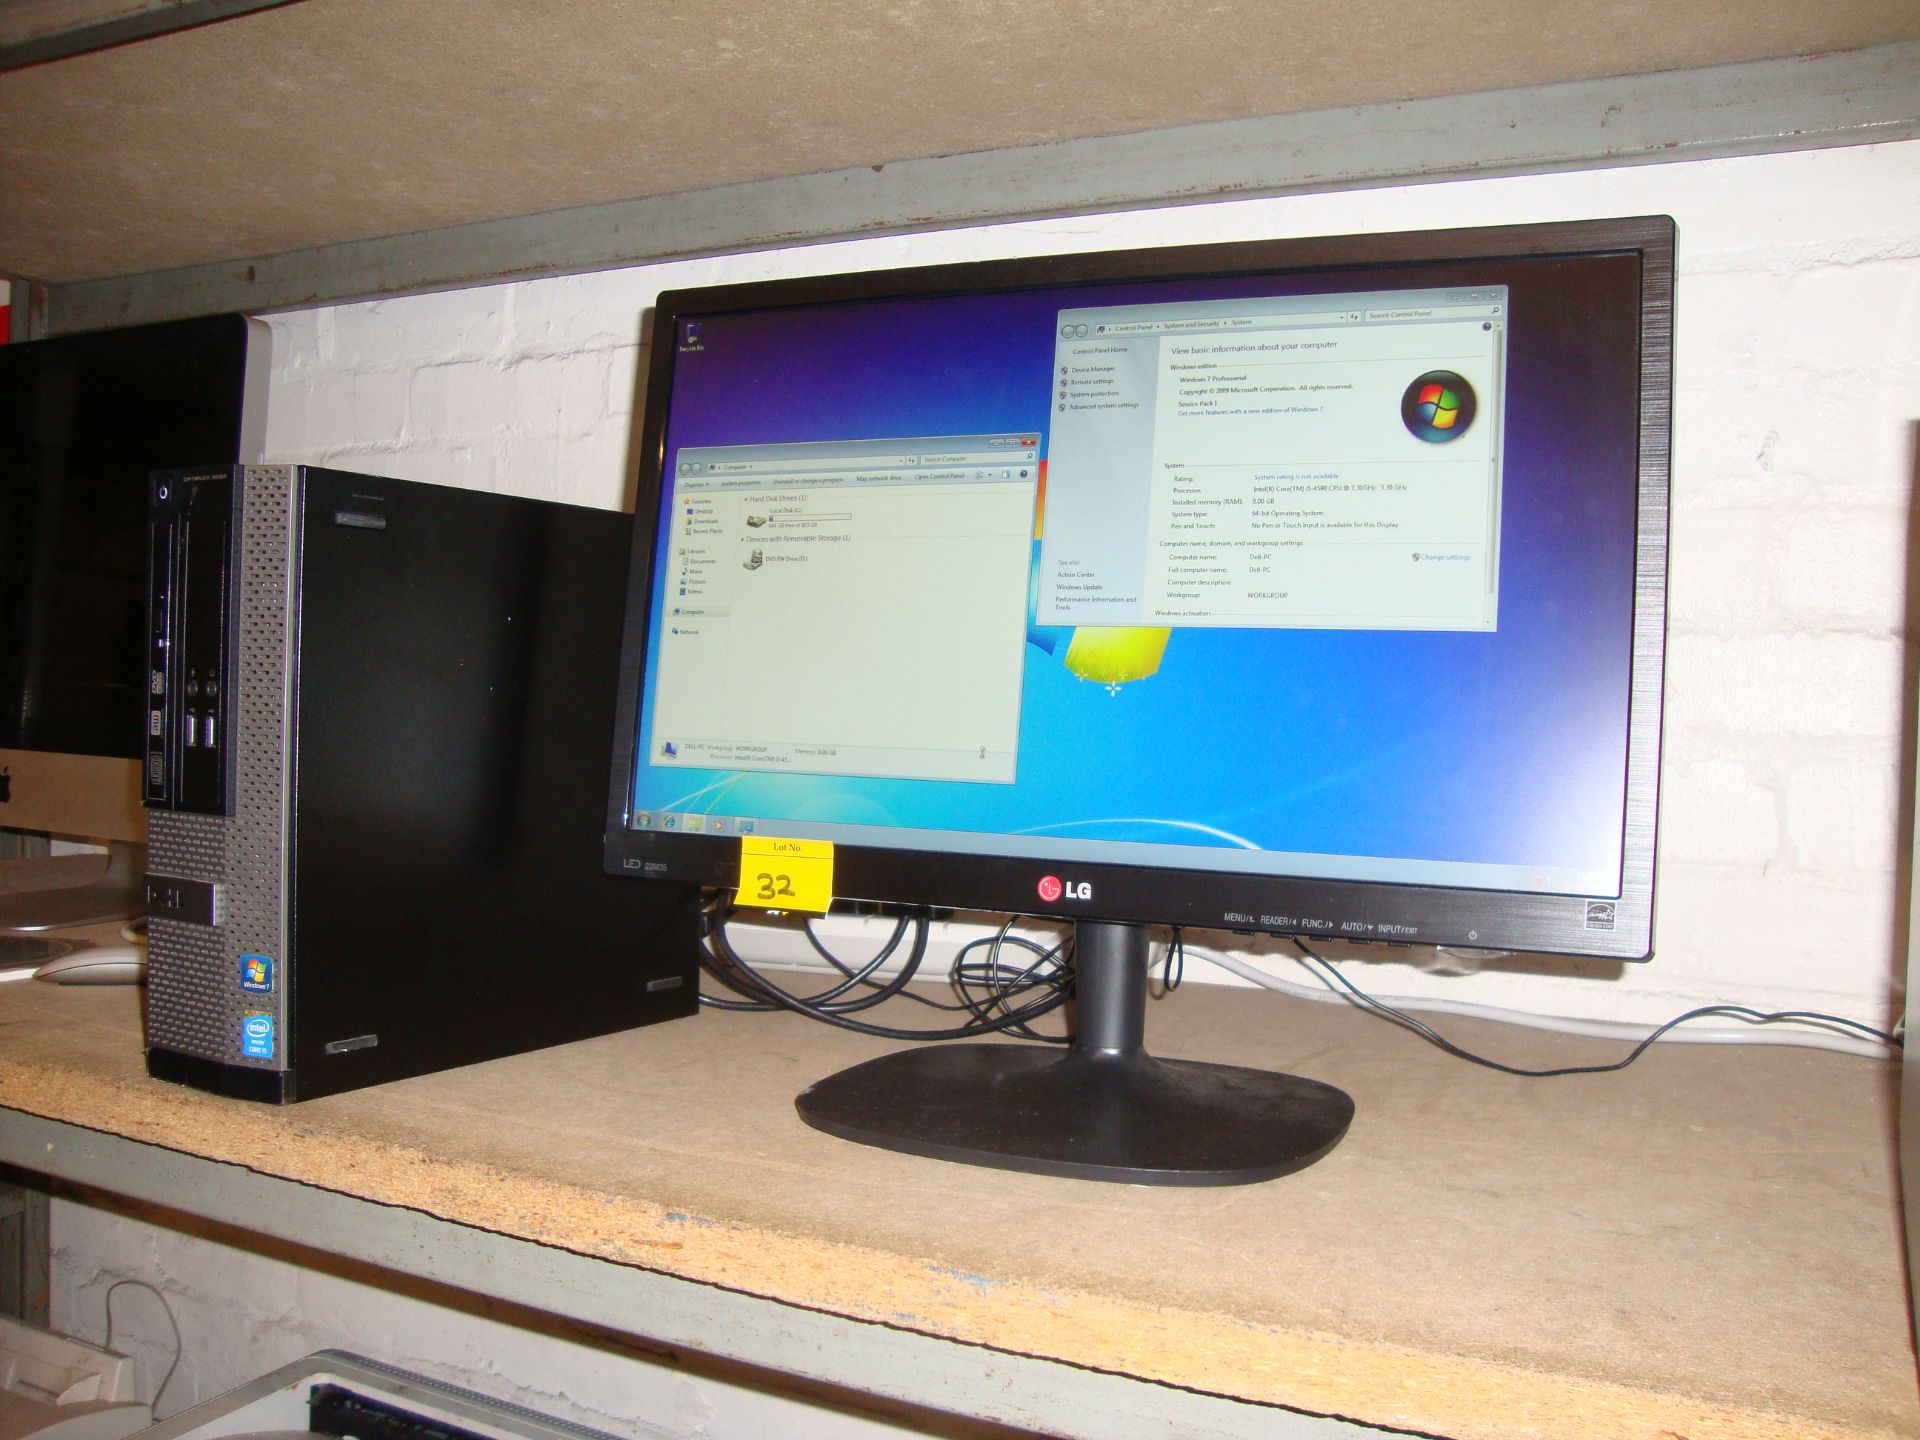 Dell Optiplex 3020 computer with Core i5-4590 processor, 8Gb RAM, 500Gb hard drive + LG 22" Monitor - Image 2 of 7